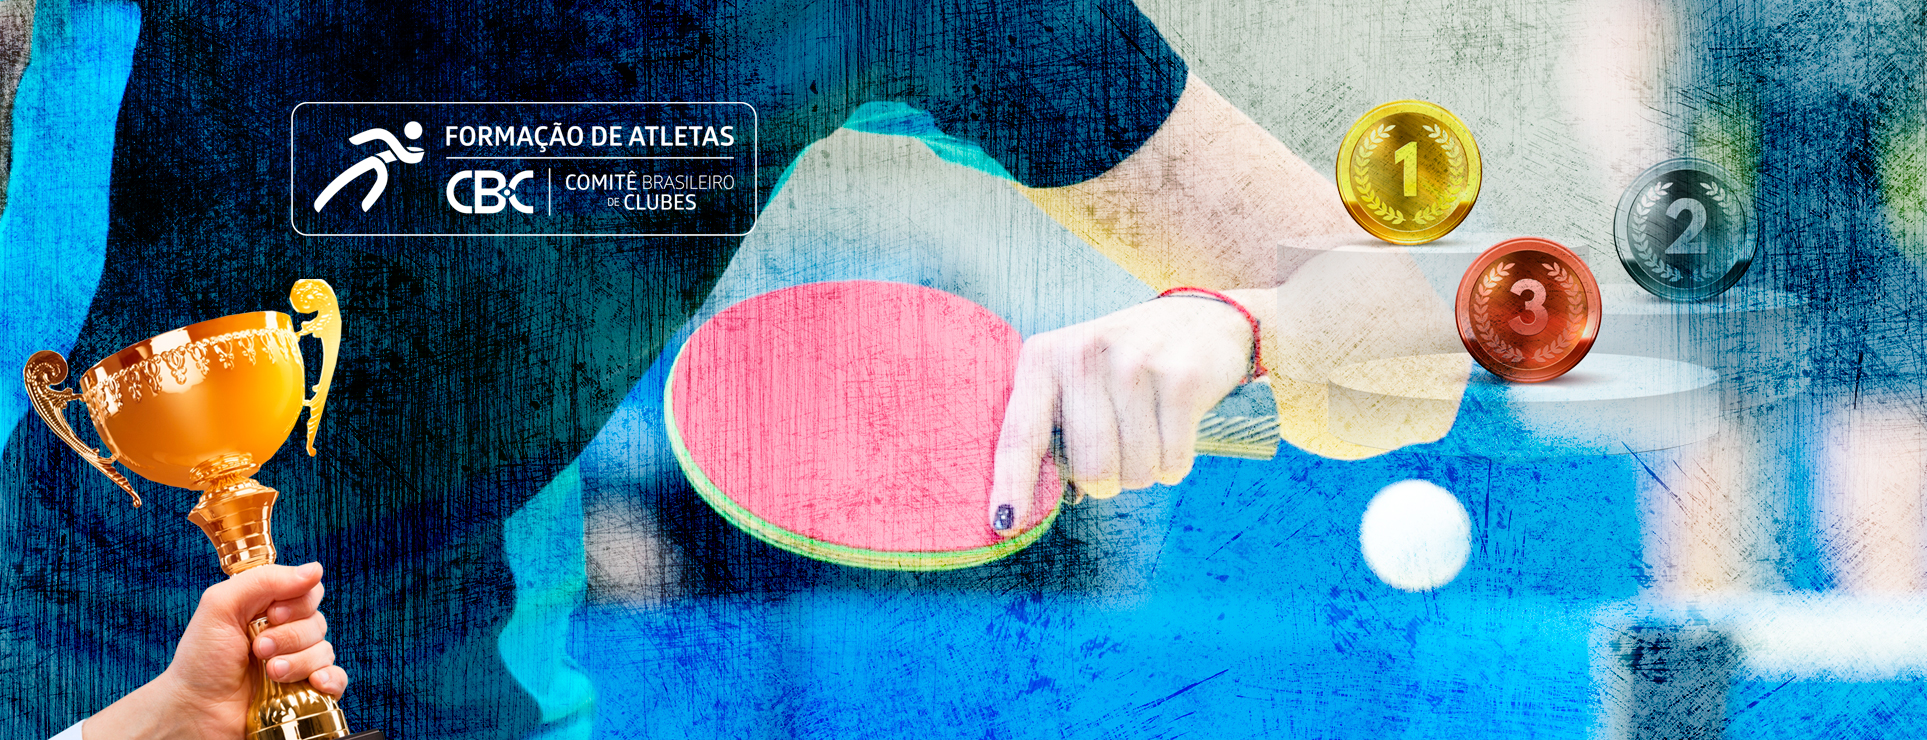 Tênis de Mesa comemora crescimento da modalidade no Brasil